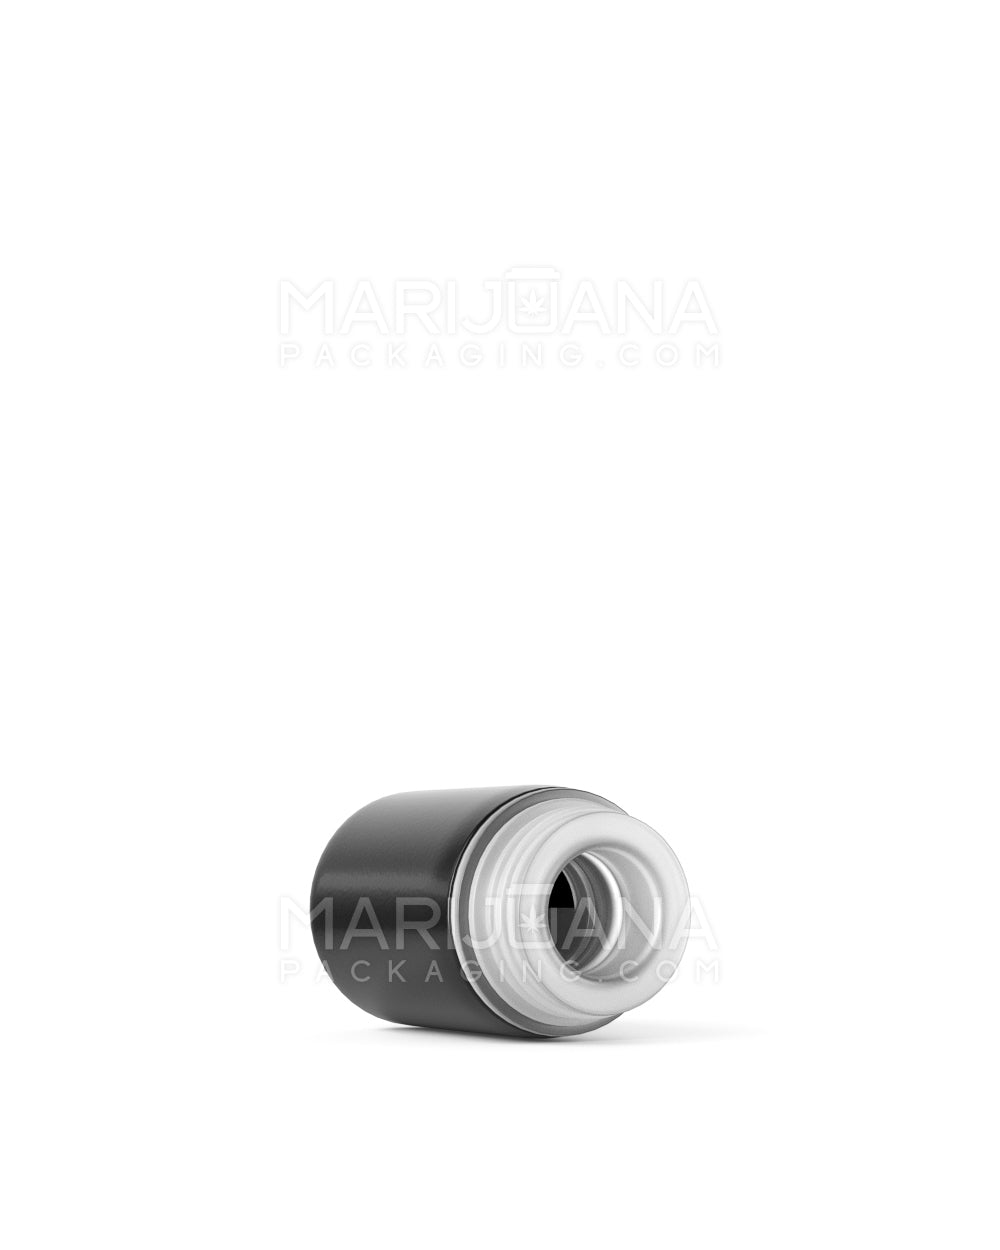 AVD | Barrel Vape Mouthpiece for Glass Cartridges | Black Ceramic - Eazy Press - 600 Count - 6